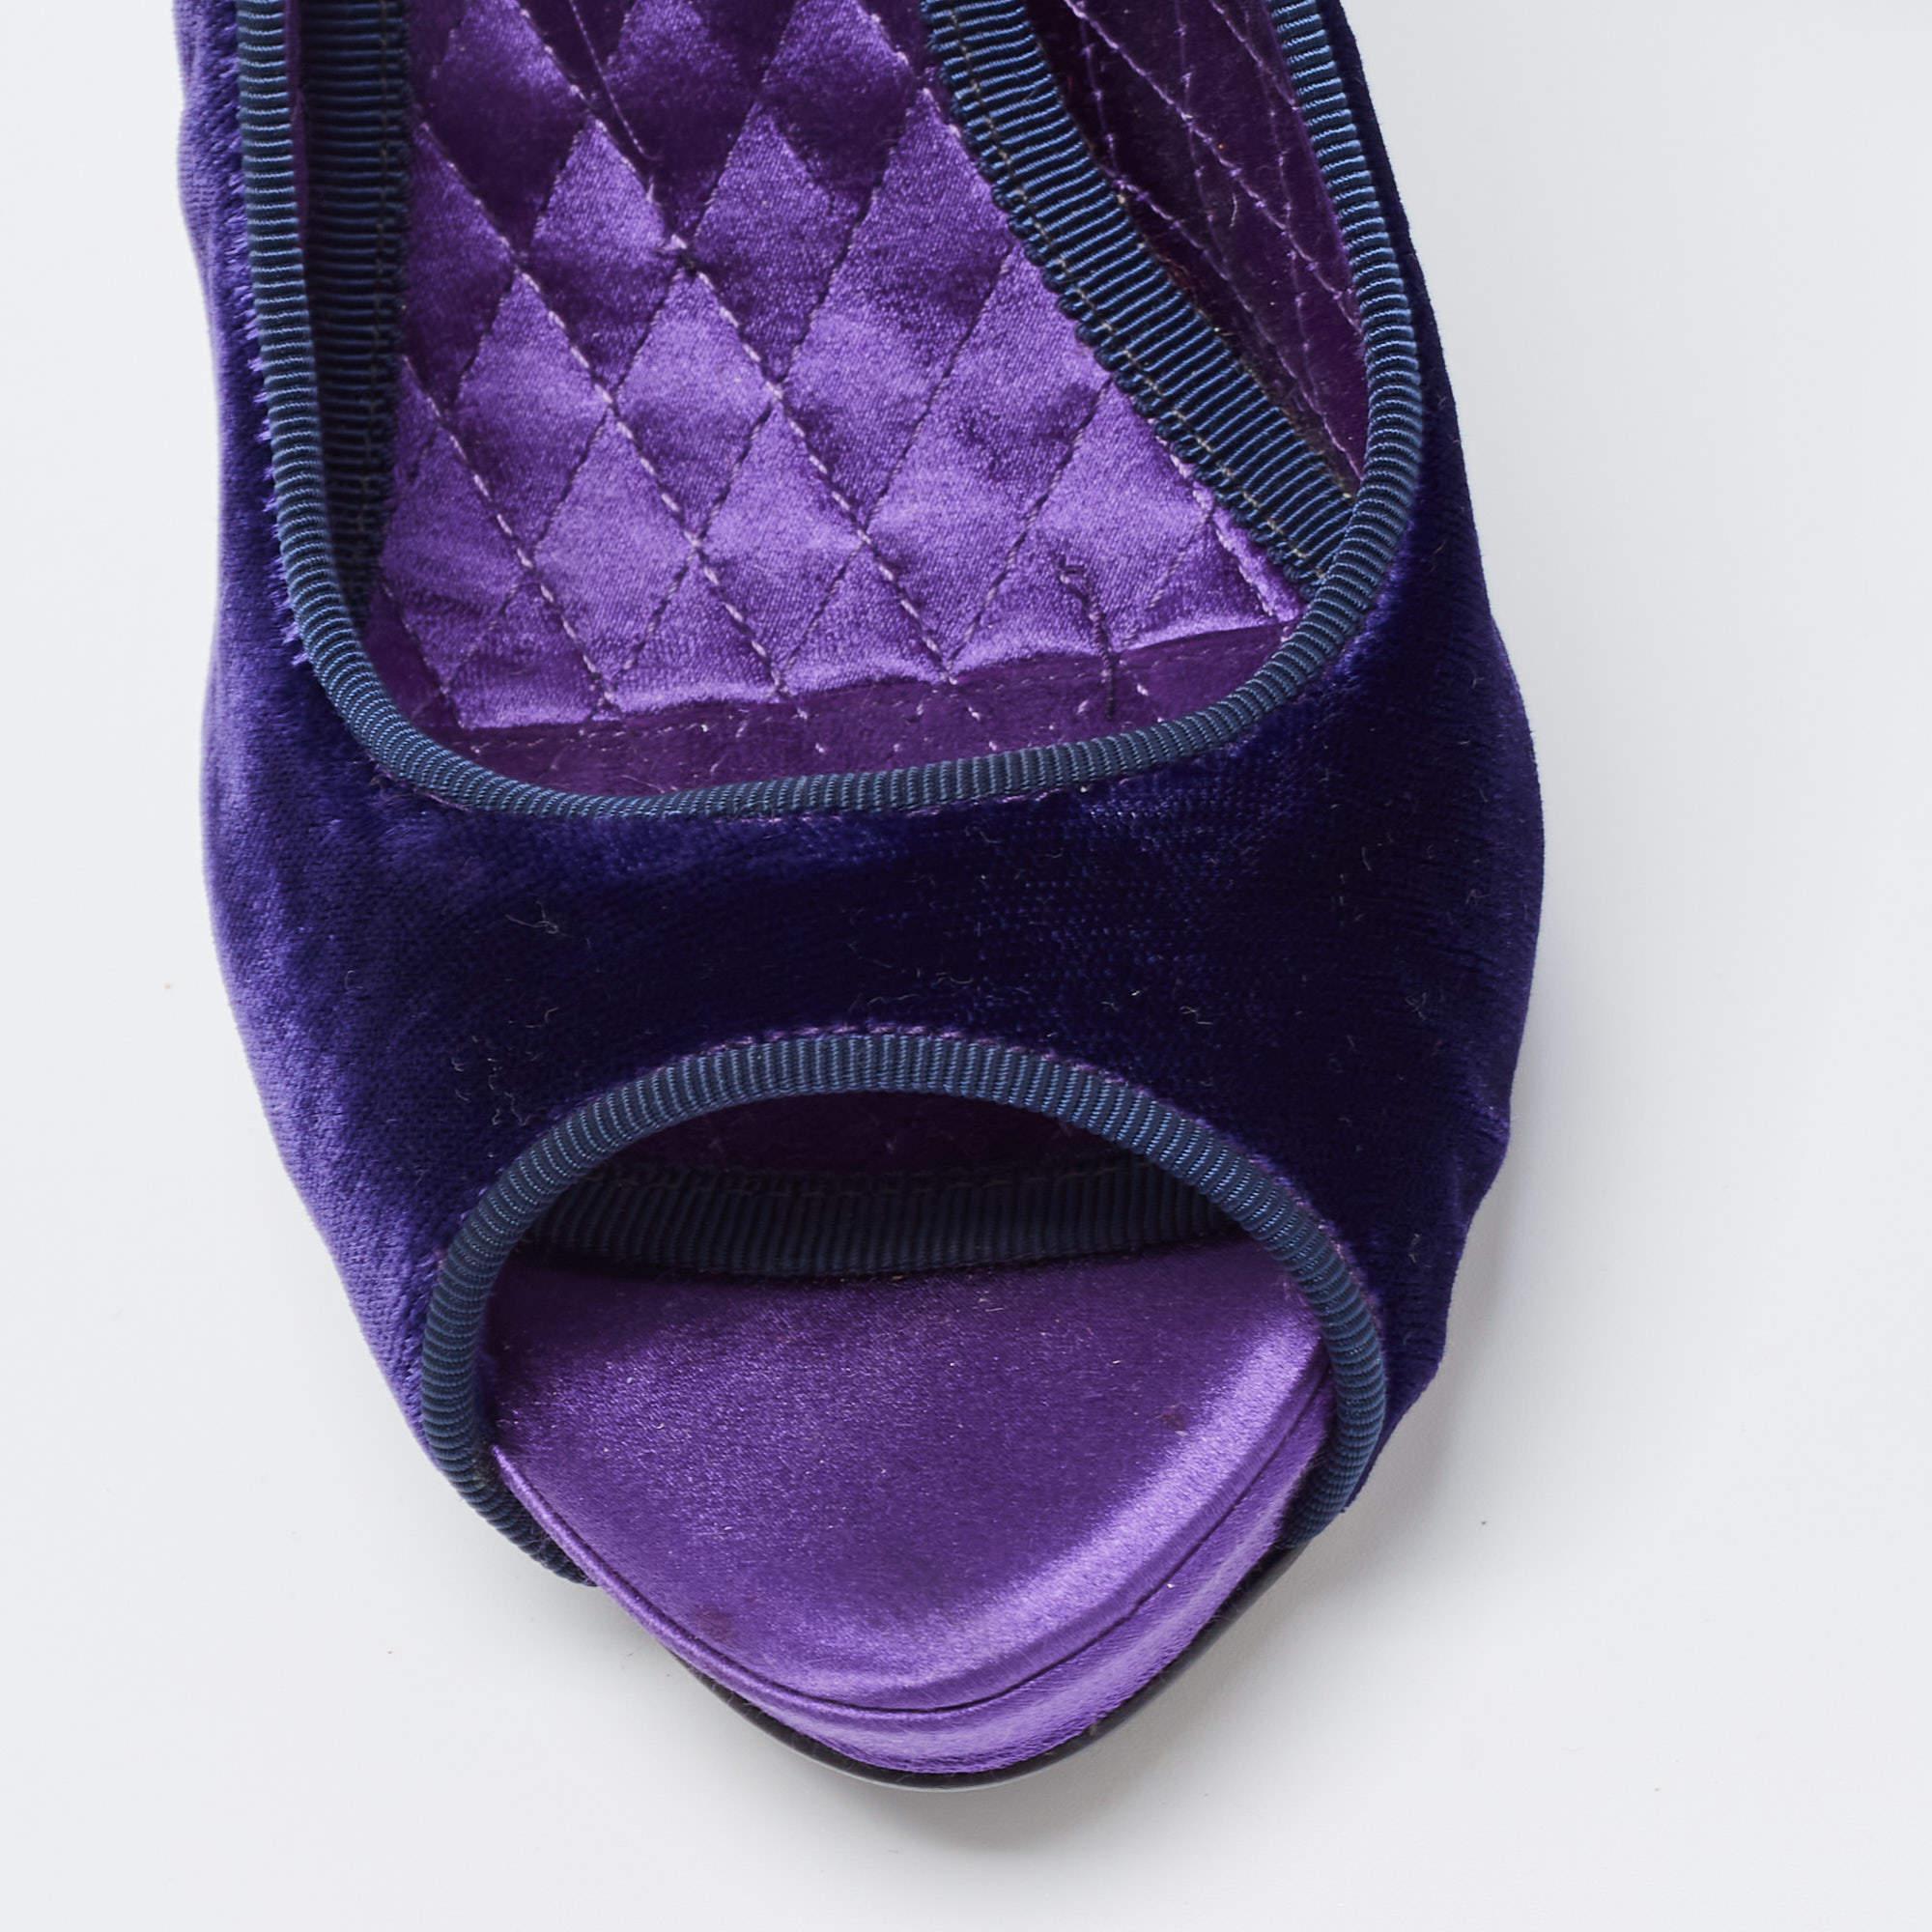 Tom Ford Purple Velvet Peep Toe Pumps Size 36 3